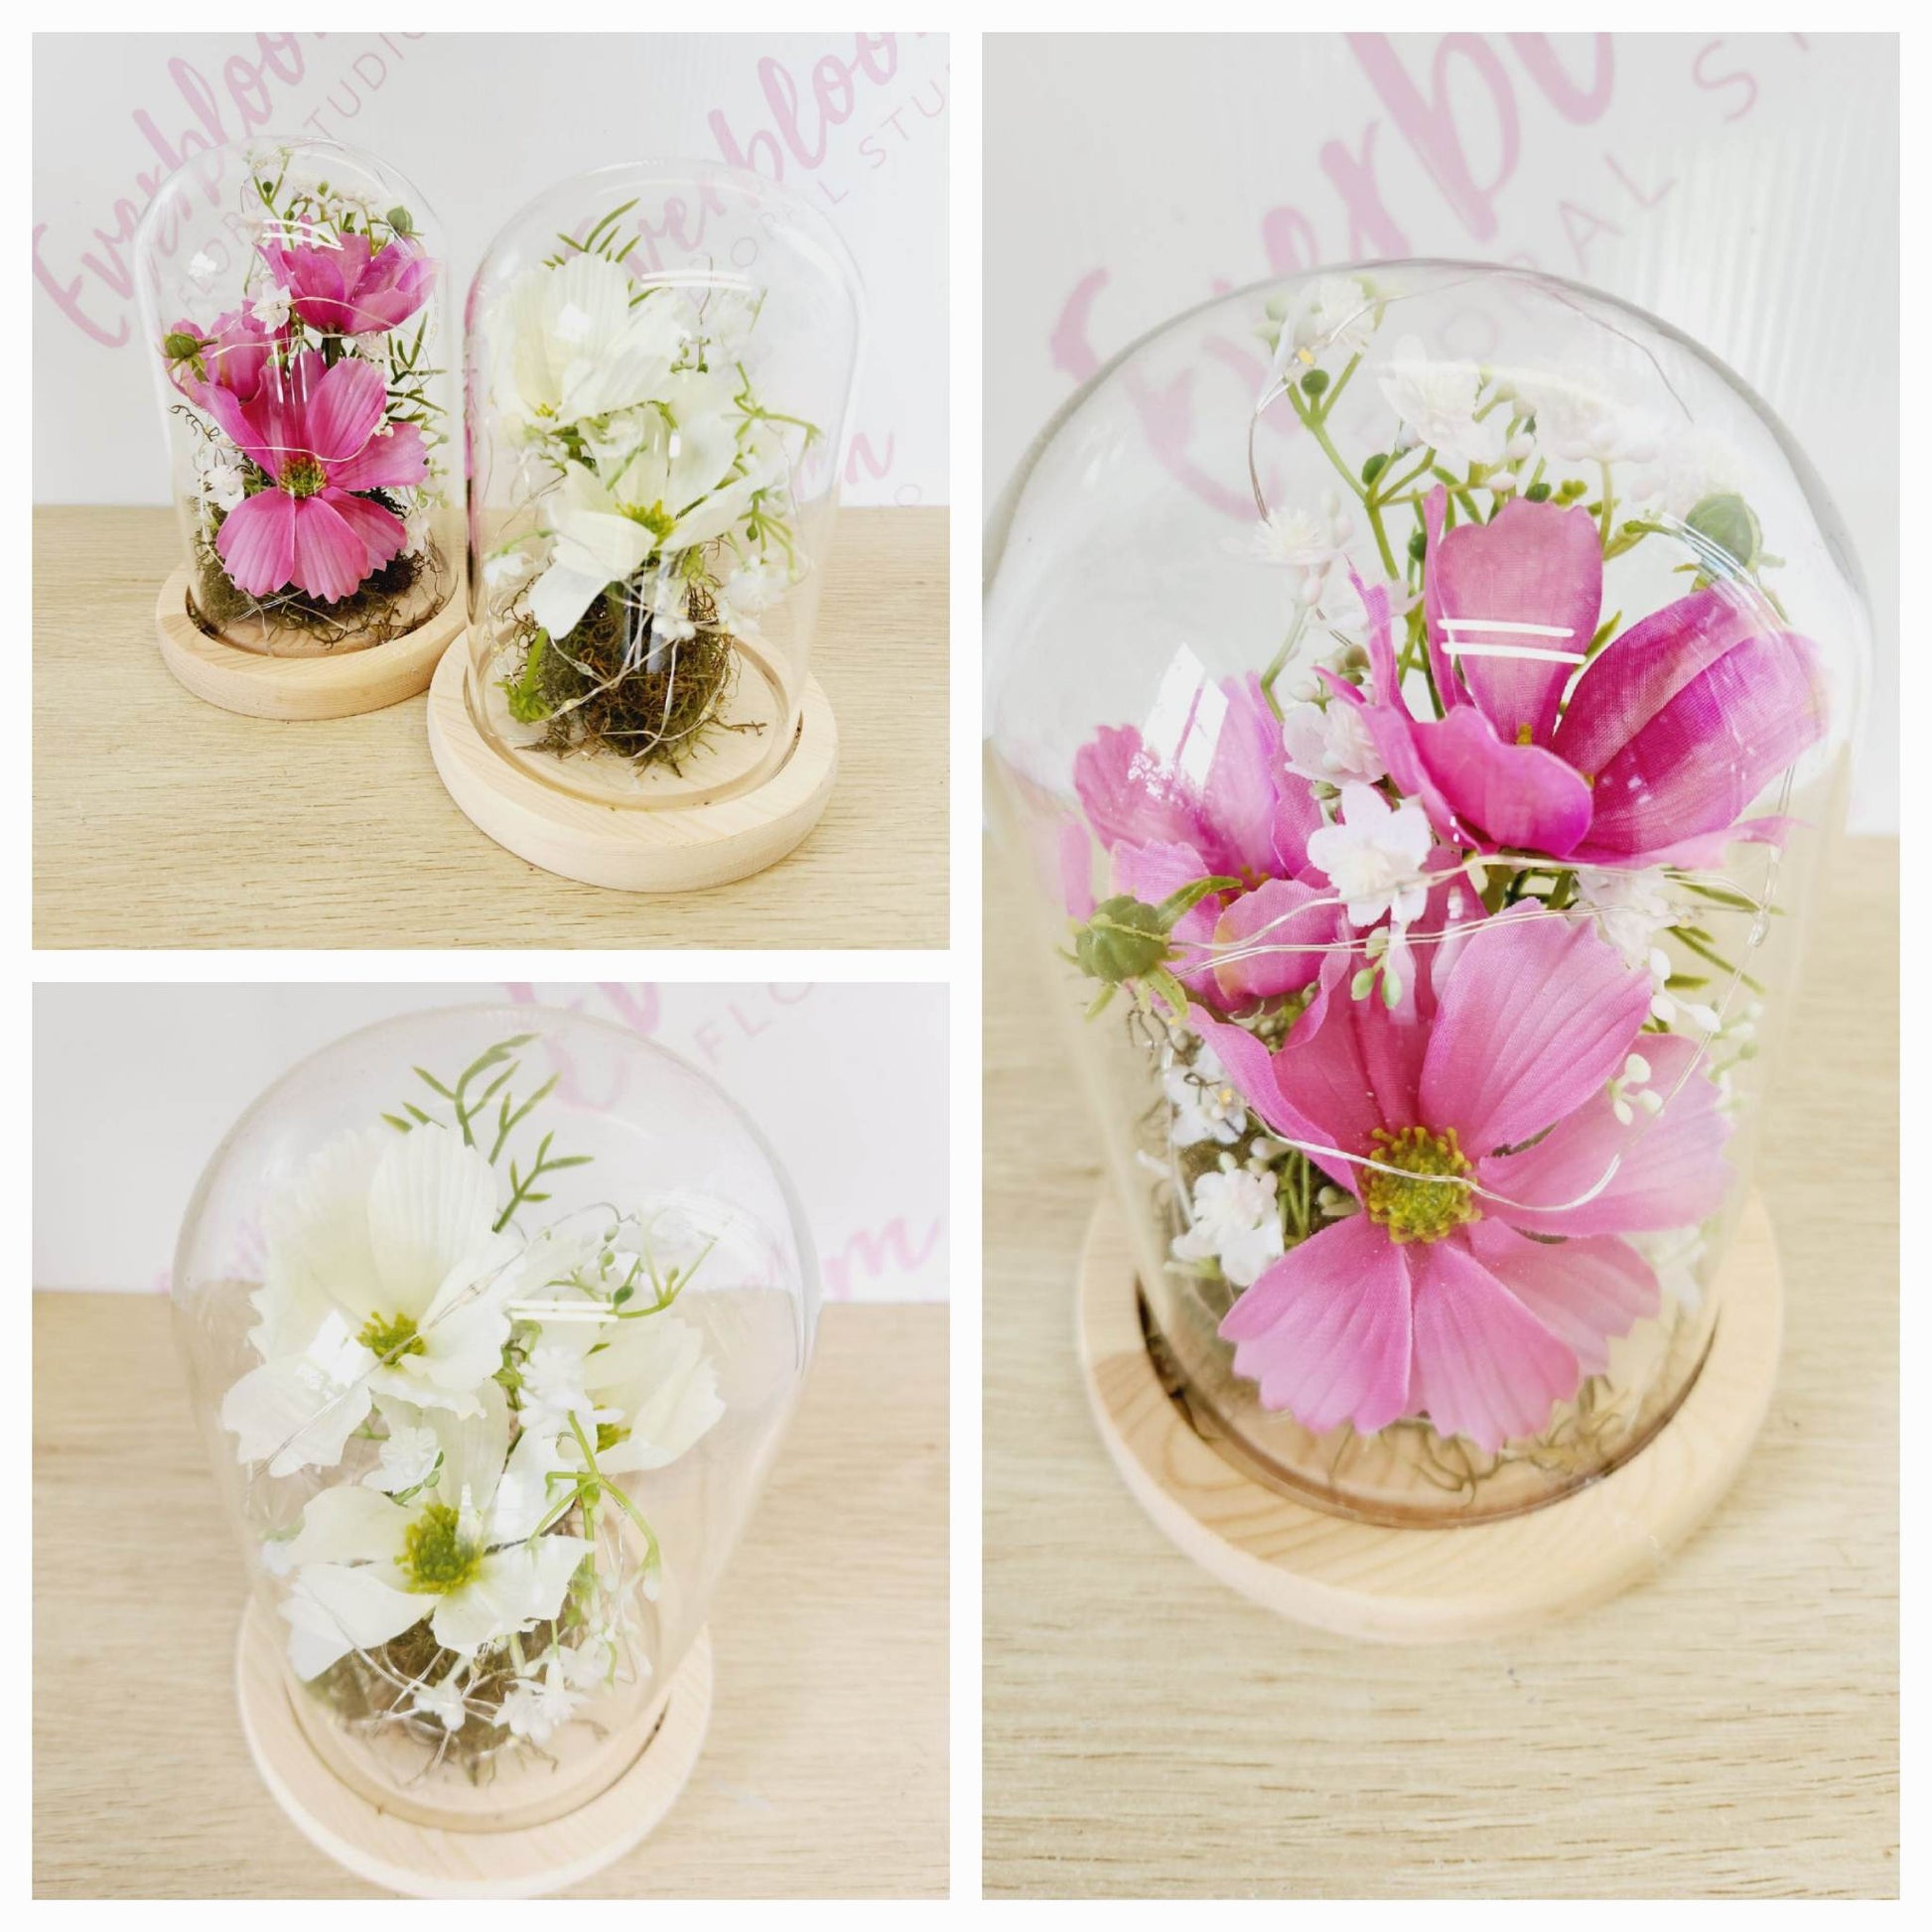 Faux flower globes - Papamoa Florist. Everbloom floral studio